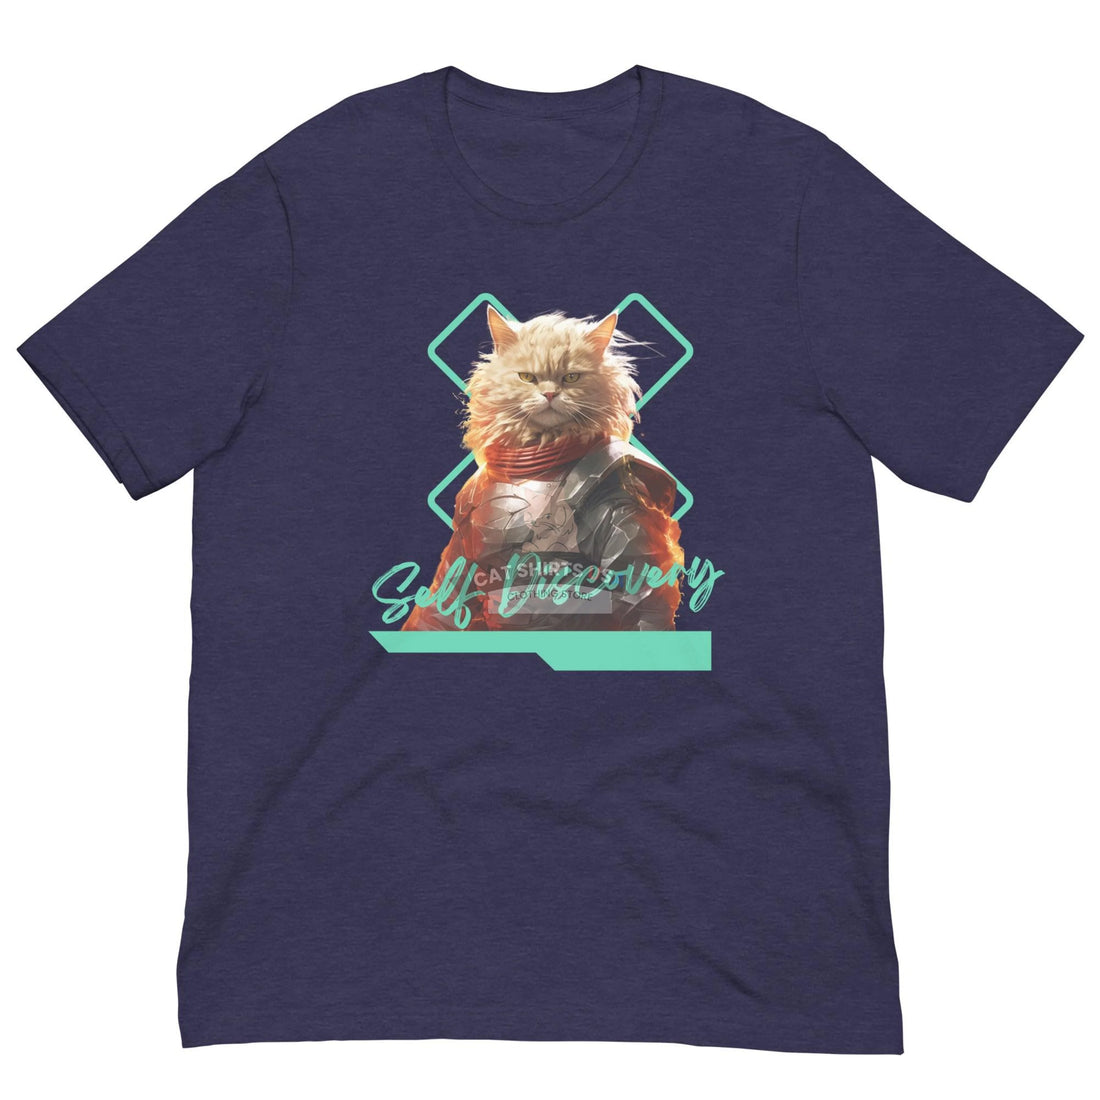 Self Discovery Cat Shirt - Cat Shirts USA